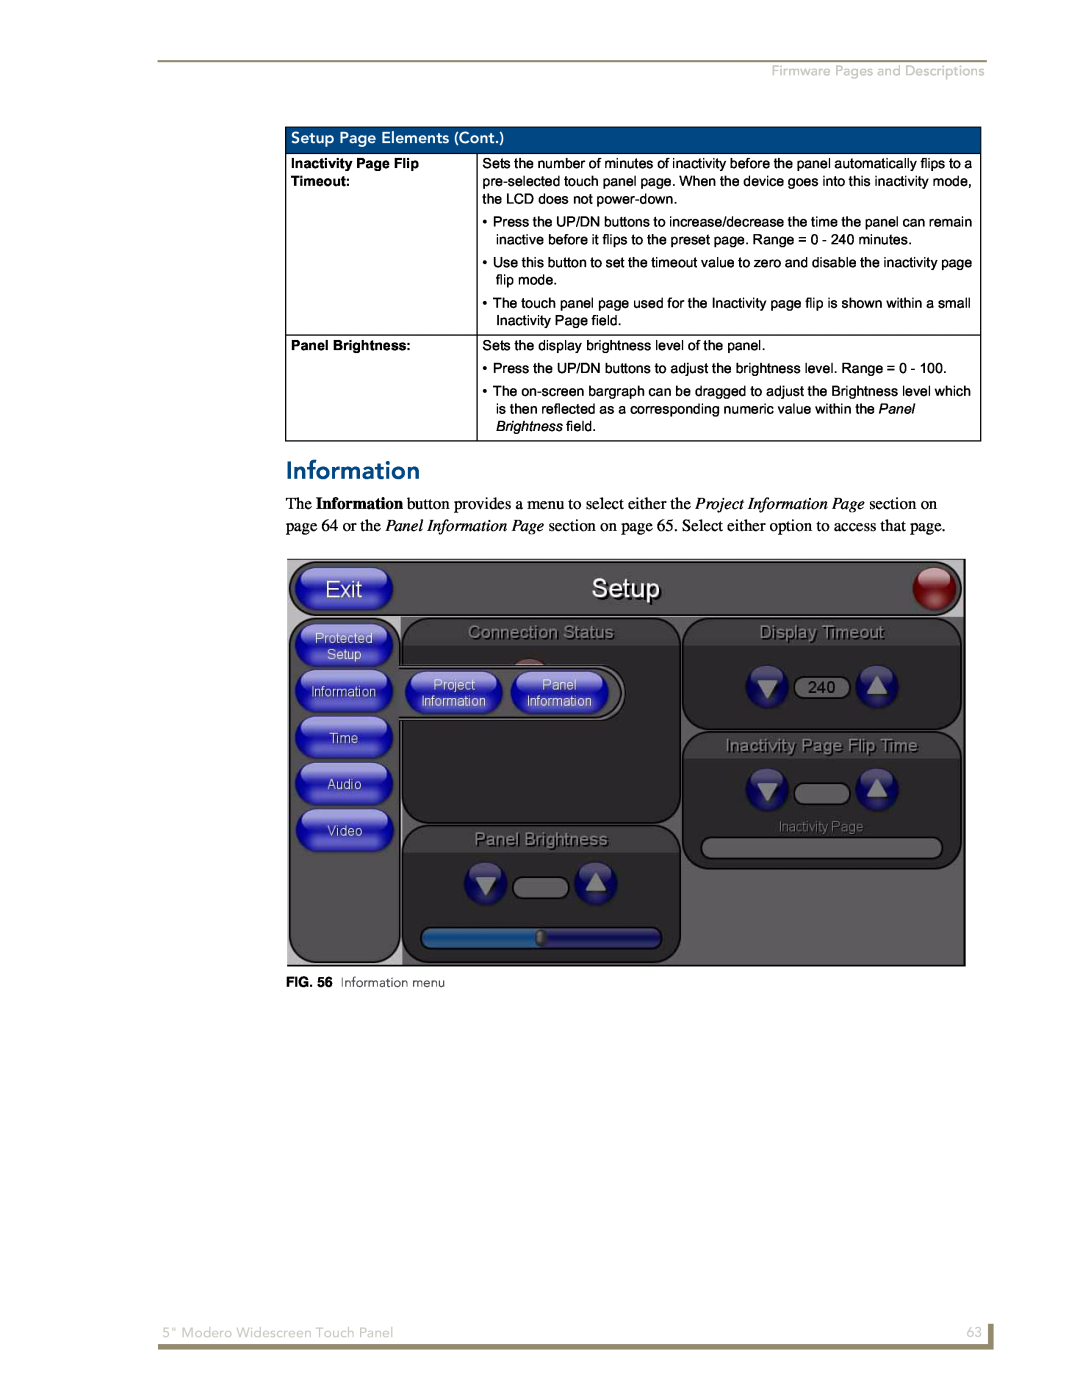 AMX NXD-CV5 manual Information, Setup Page Elements Cont, Inactivity Page Flip, Timeout, Panel Brightness, Brightness field 